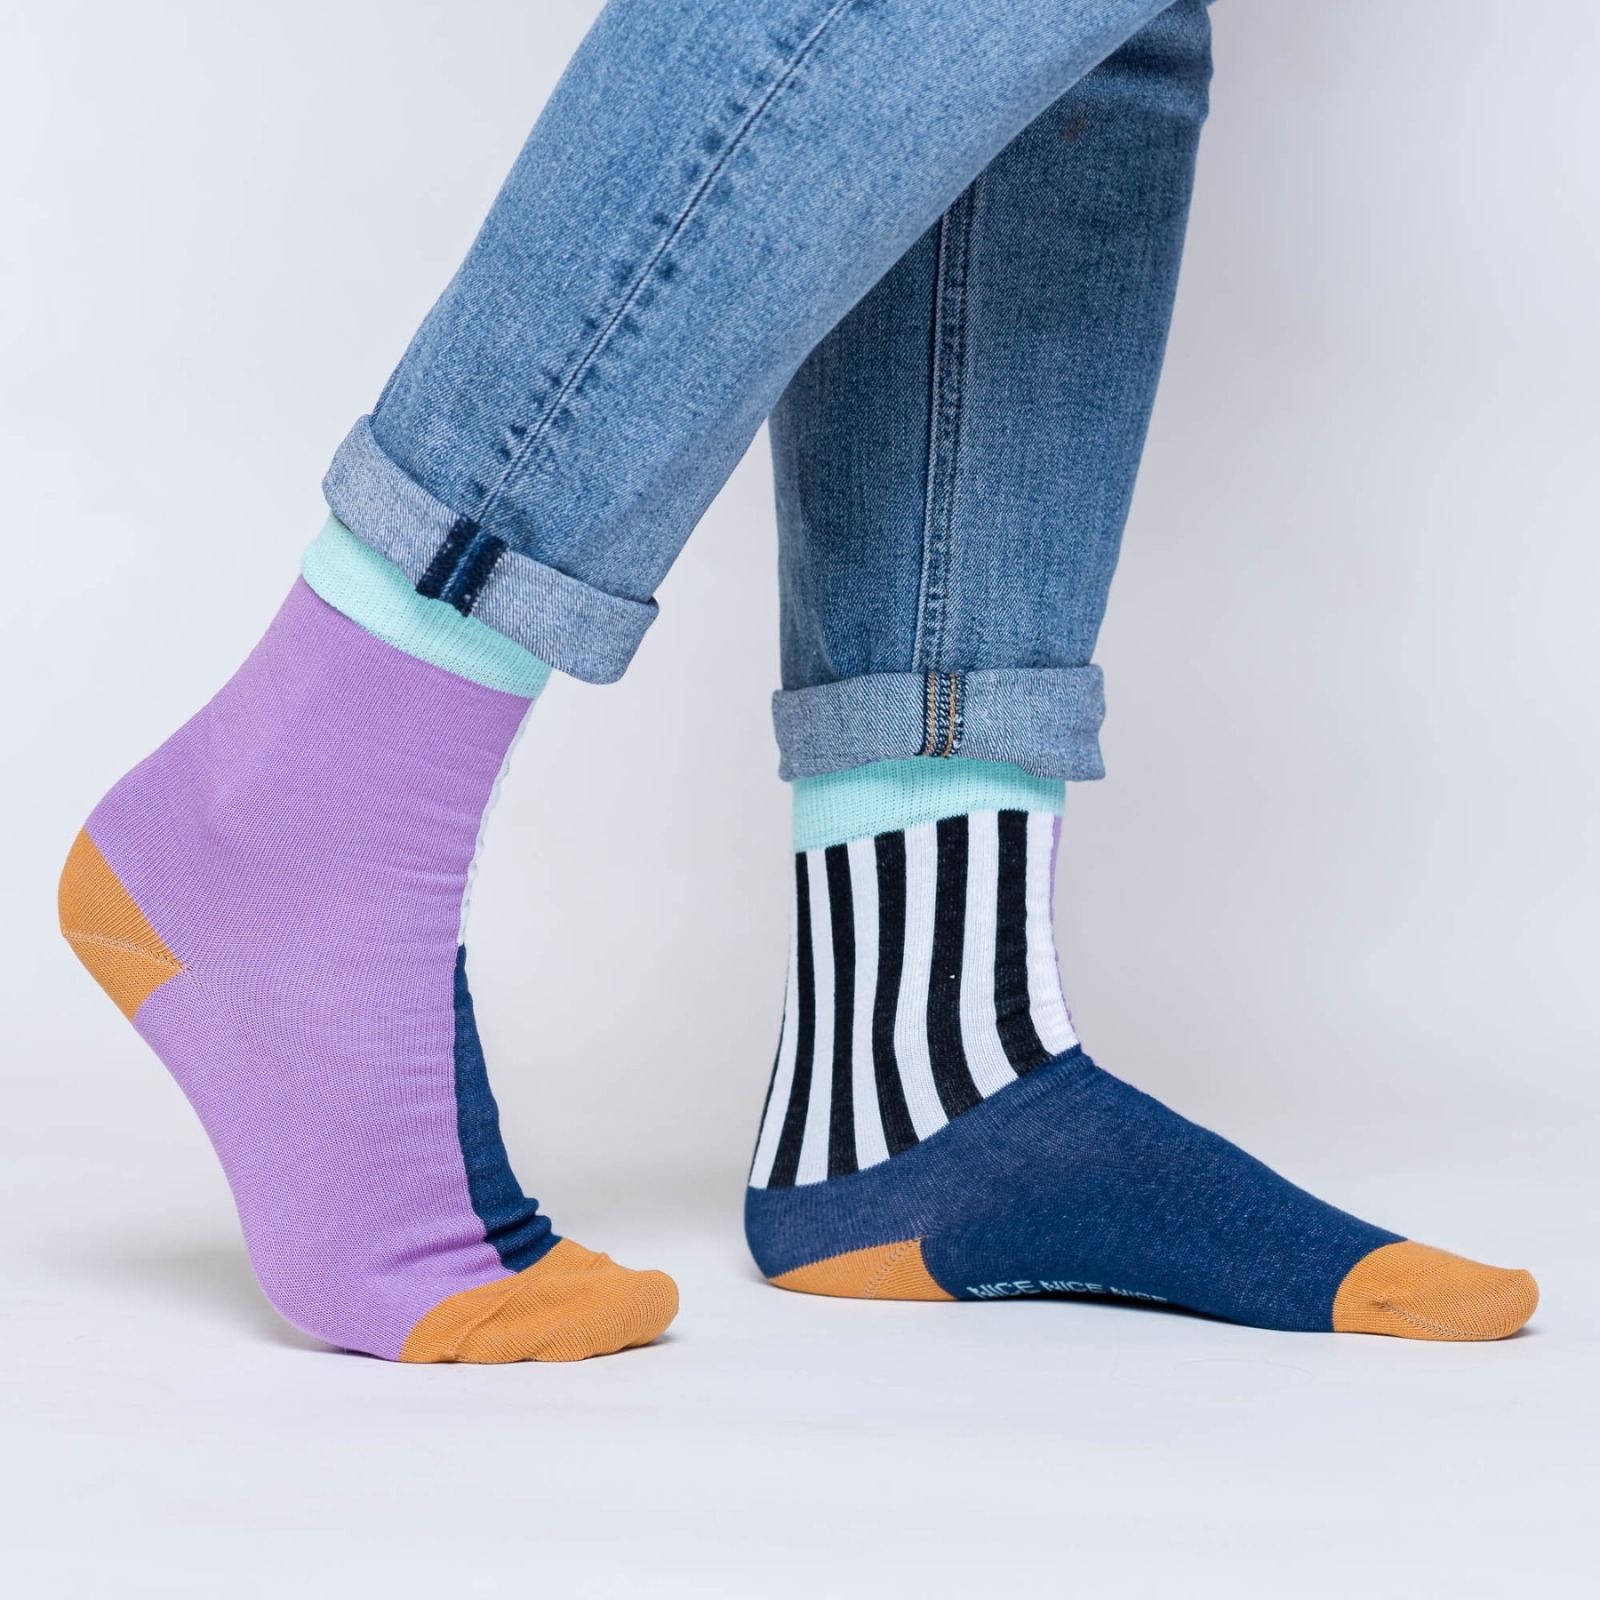 nicenicenice - nice socks half stripes purple 2